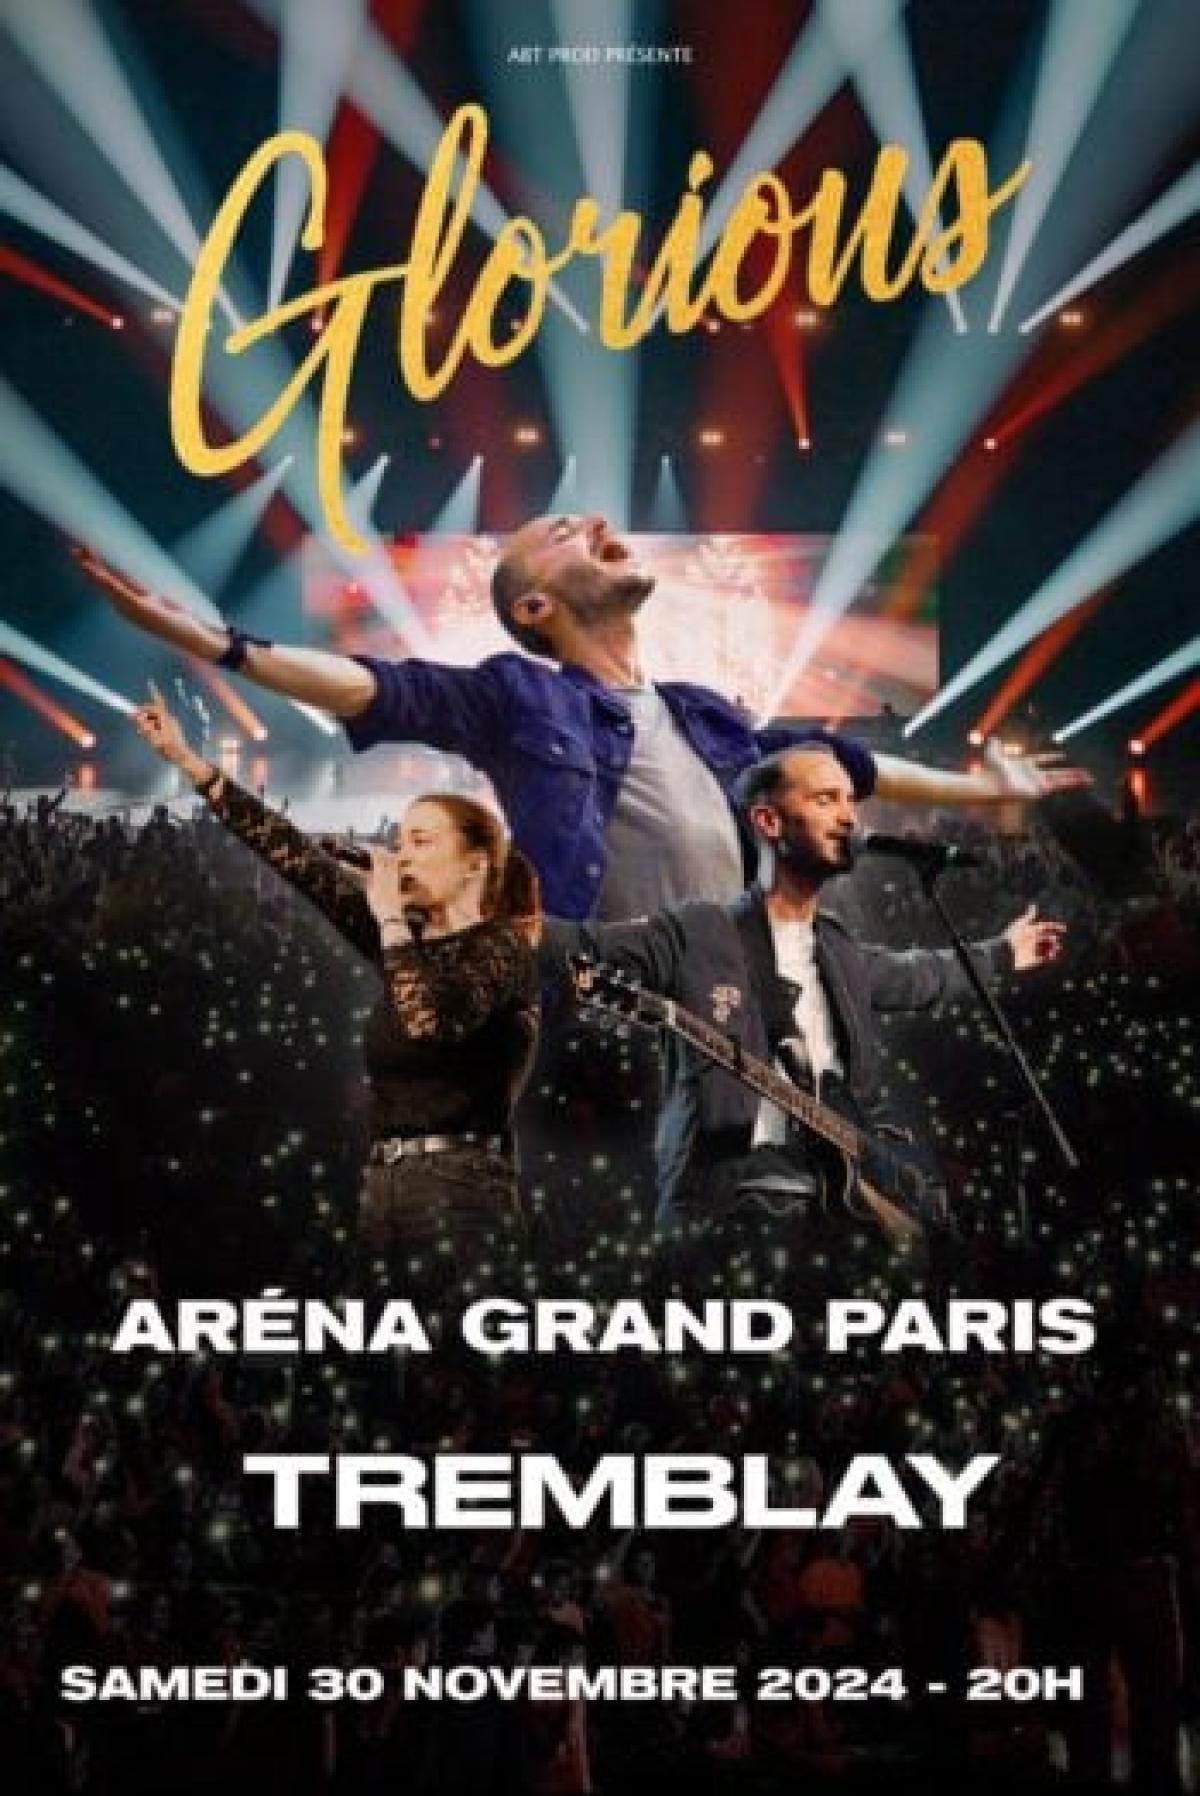 Glorious at Arena Grand Paris Tickets